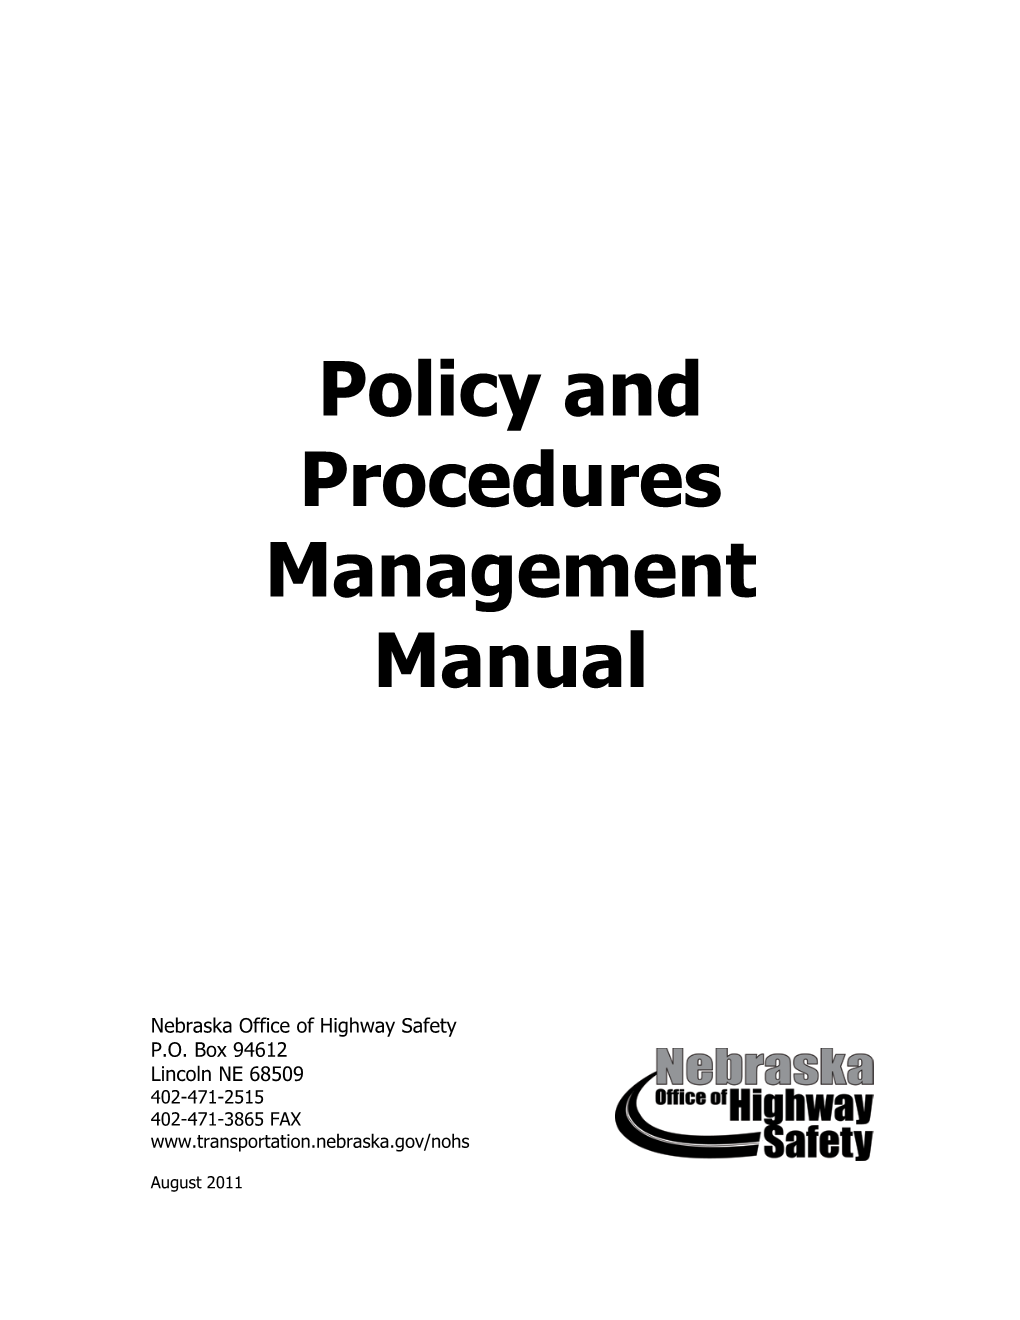 Management Manual